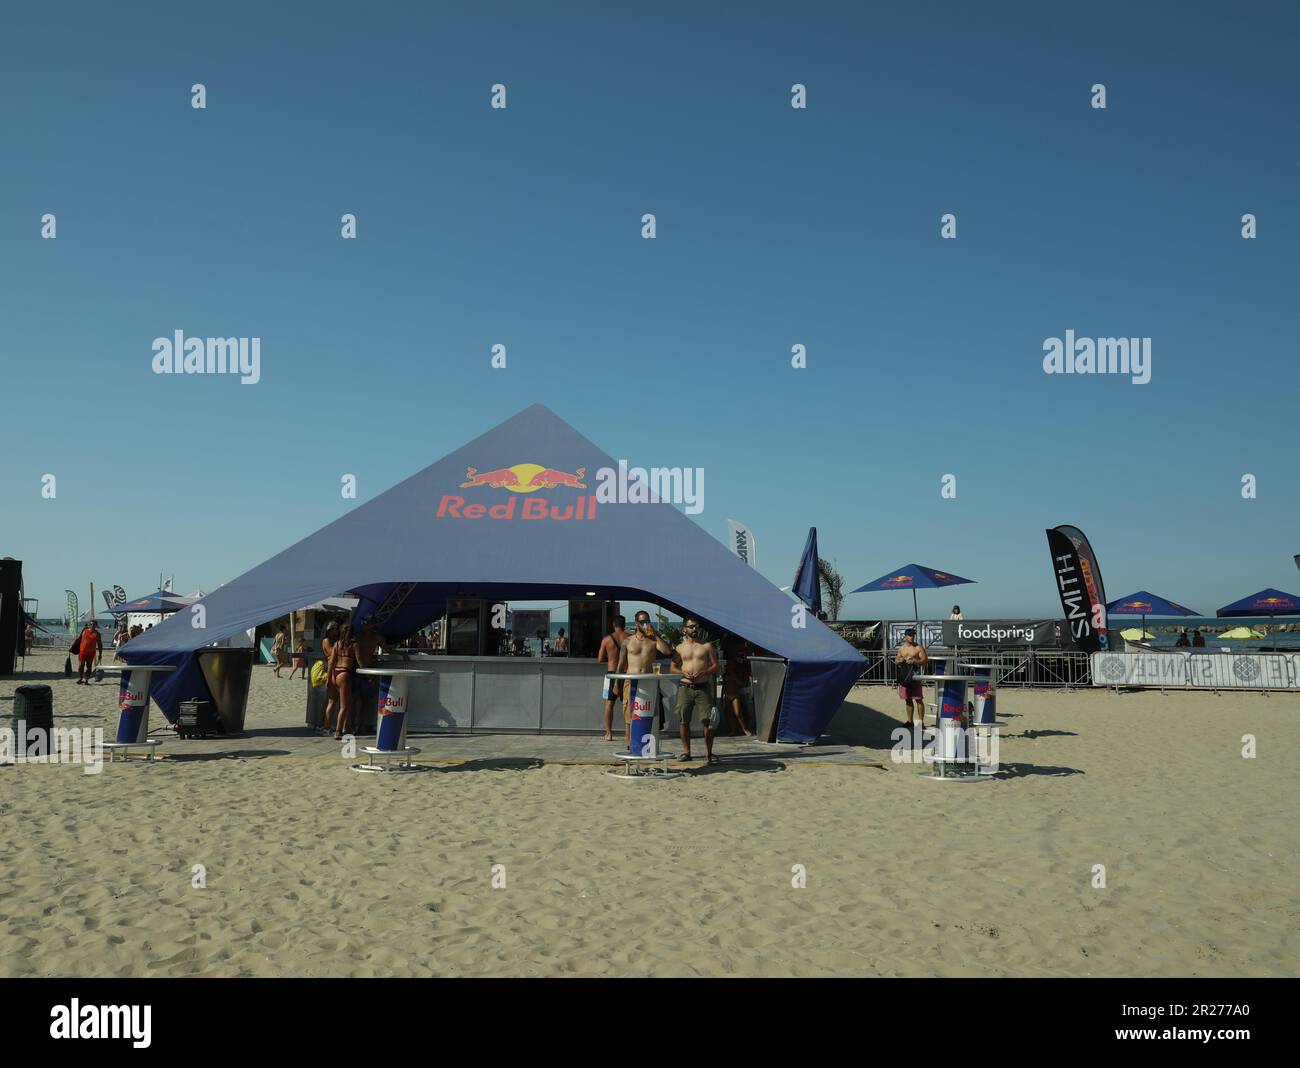 SENIGALLIA, ITALIEN - 22. JULI 2022: Red Bull Zelt am Strand unter blauem Himmel Stockfoto